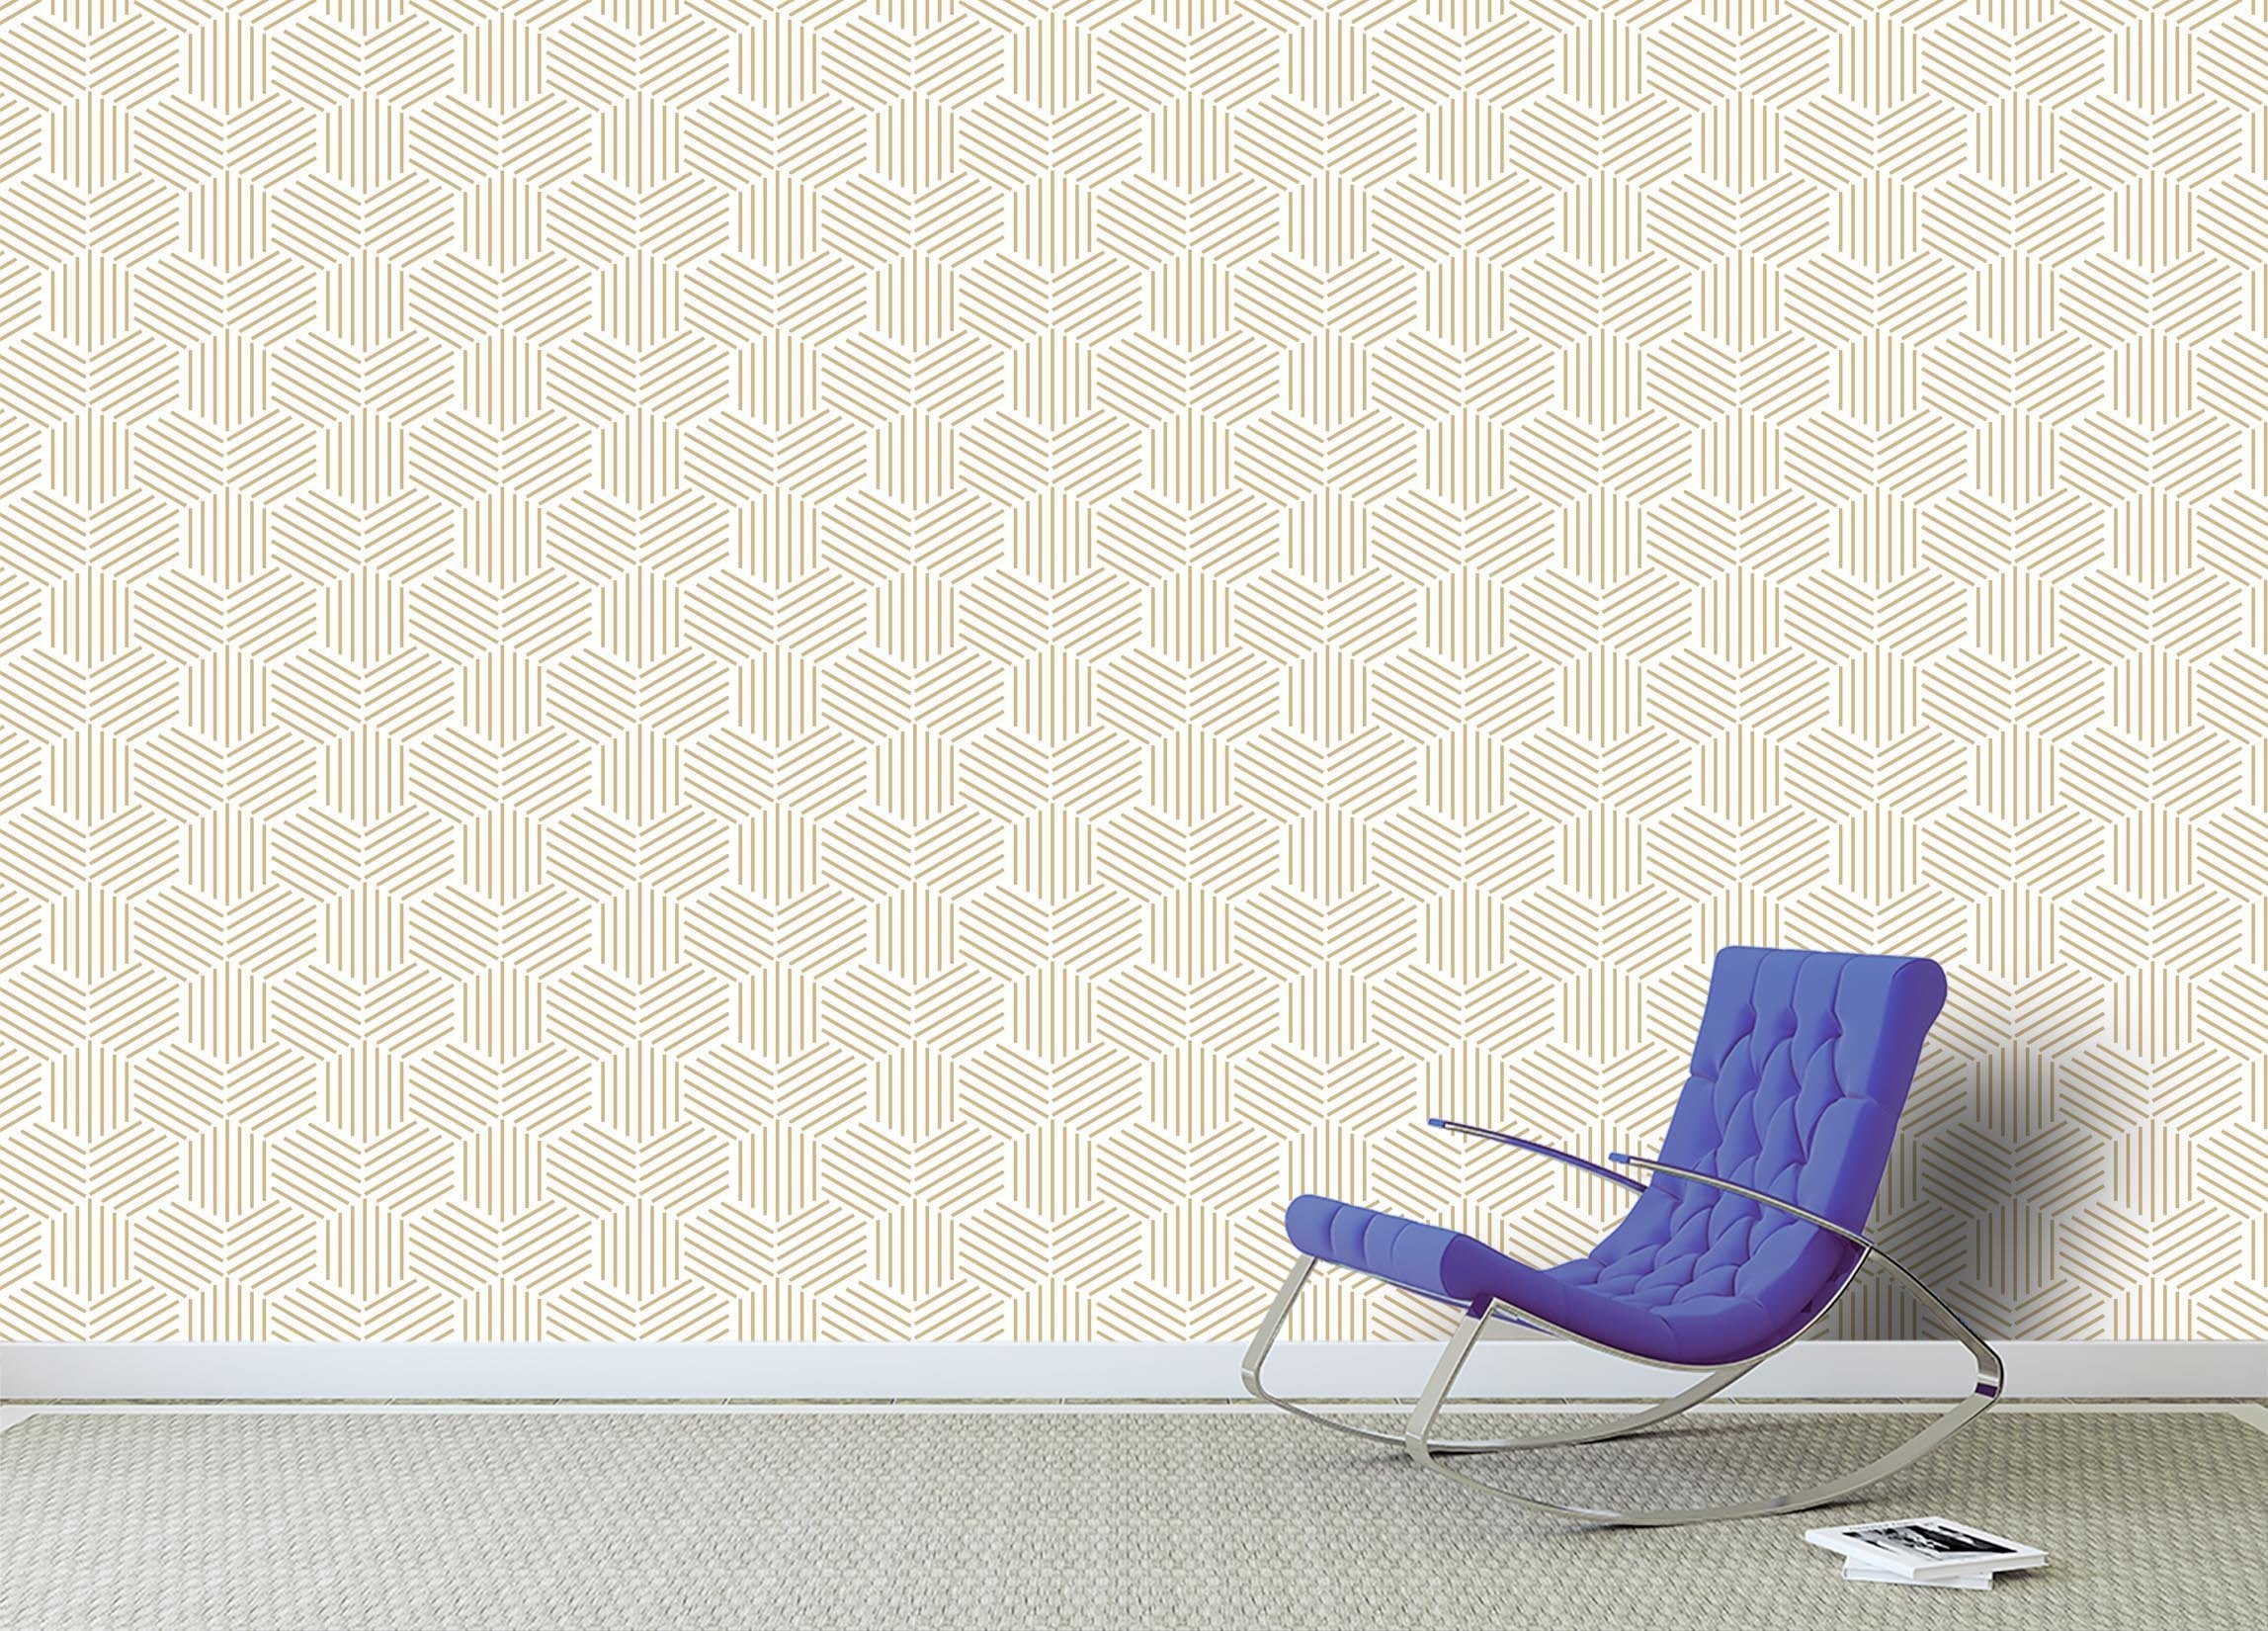 3D Hexagonal Line Pattern 034 Wallpaper AJ Wallpaper 